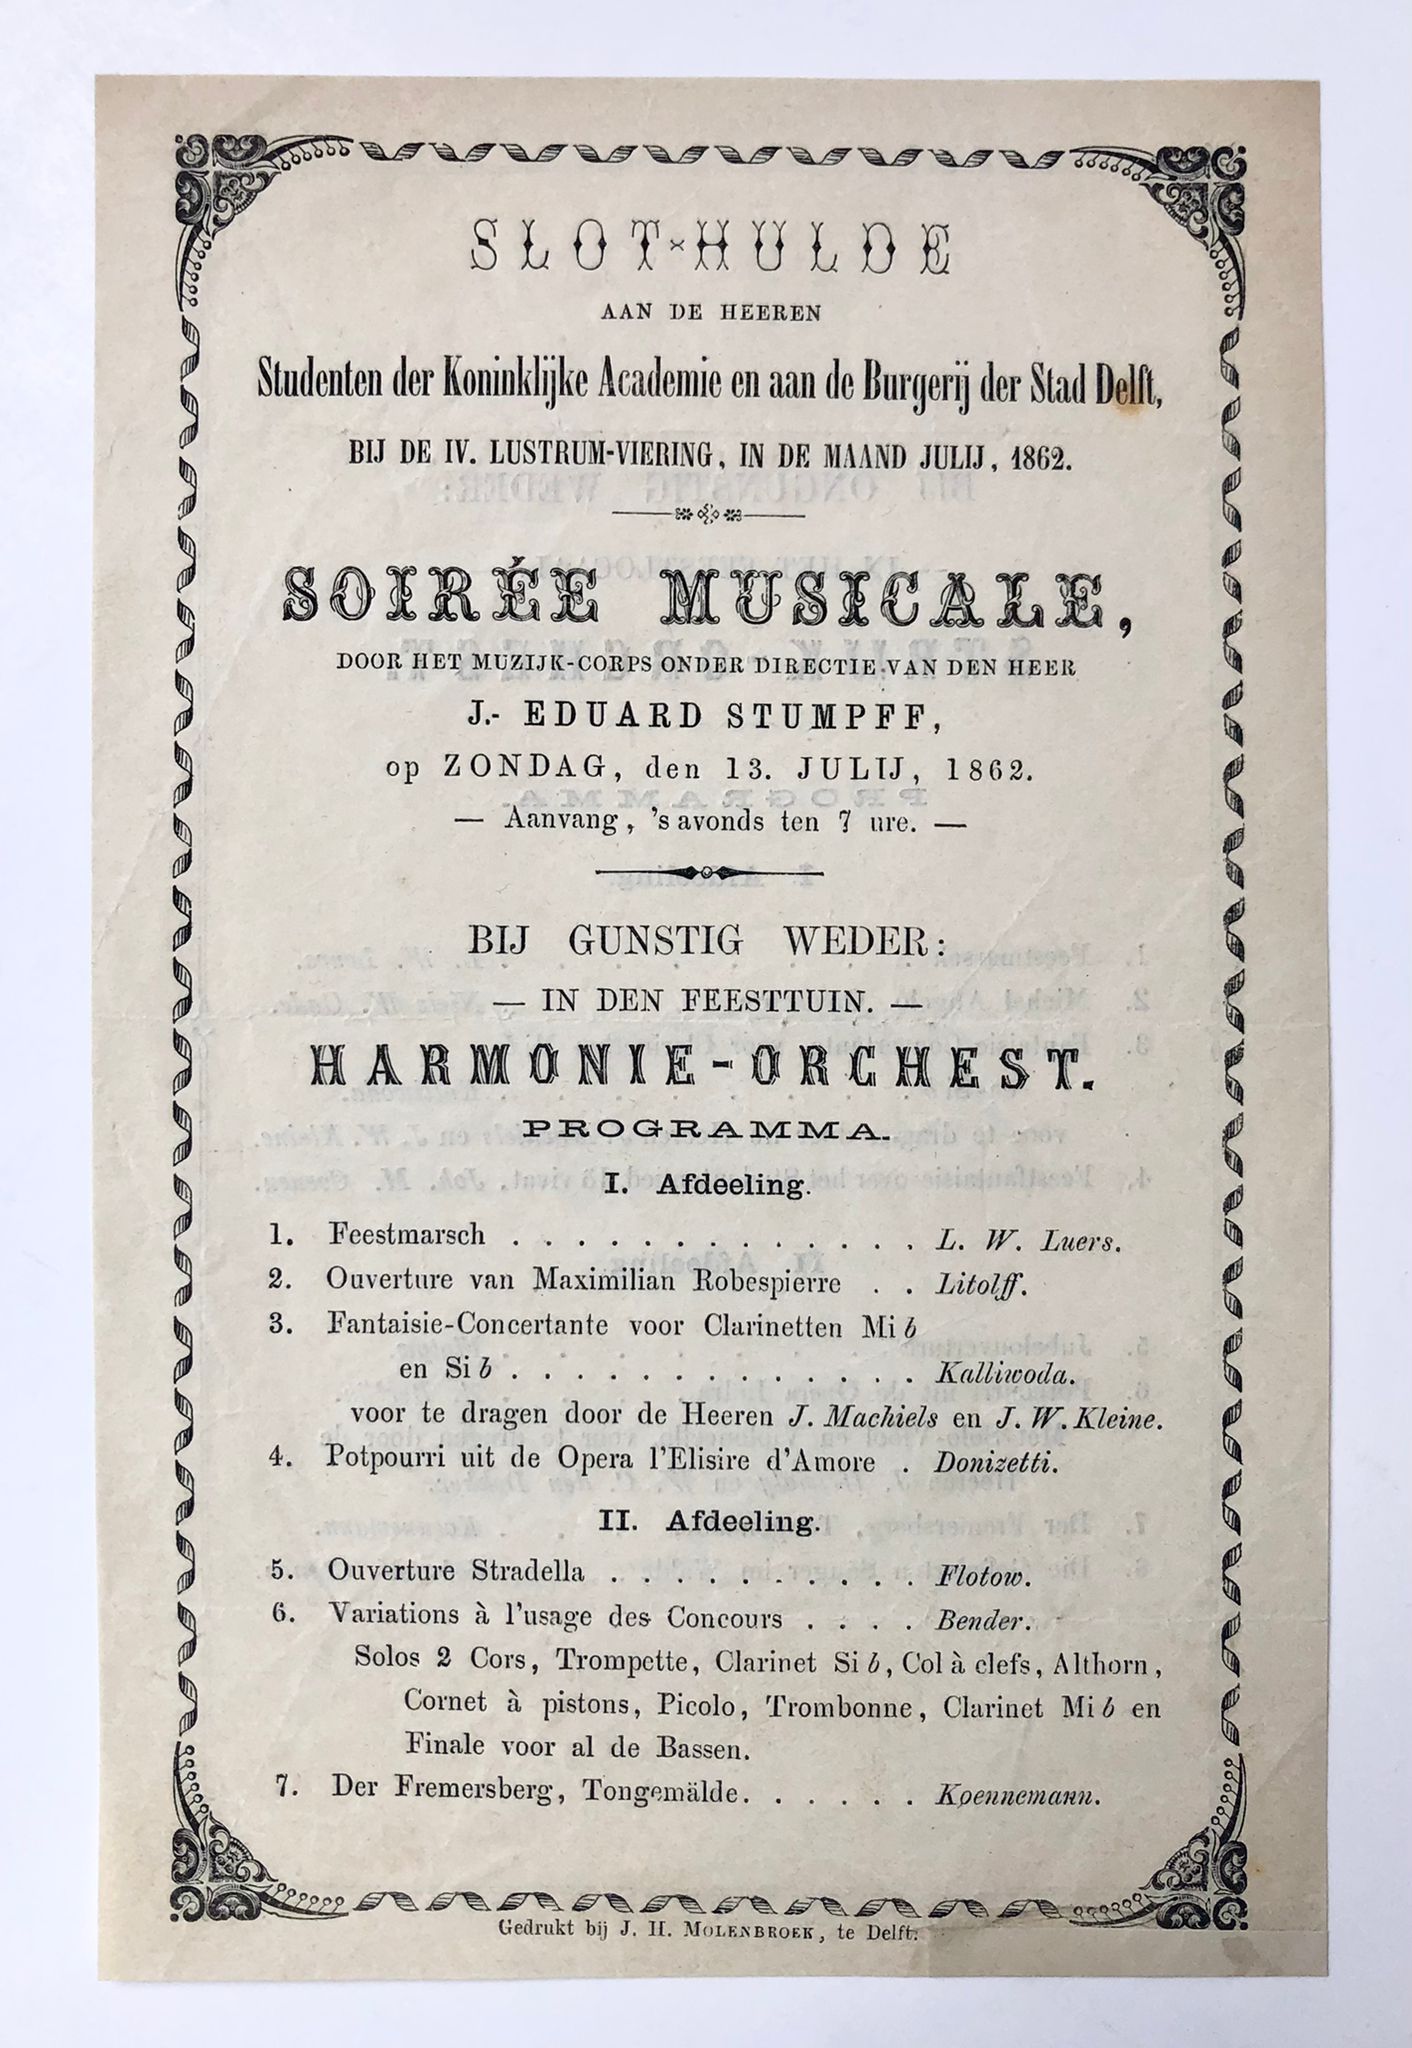 [Printed publications, Music, Delft, Student Koninklijke Academie, 1862] Programm soiree musicale, Delft 13-7-1862 for the lustrum studenten Kon. Academie. Printed, 2 pp.